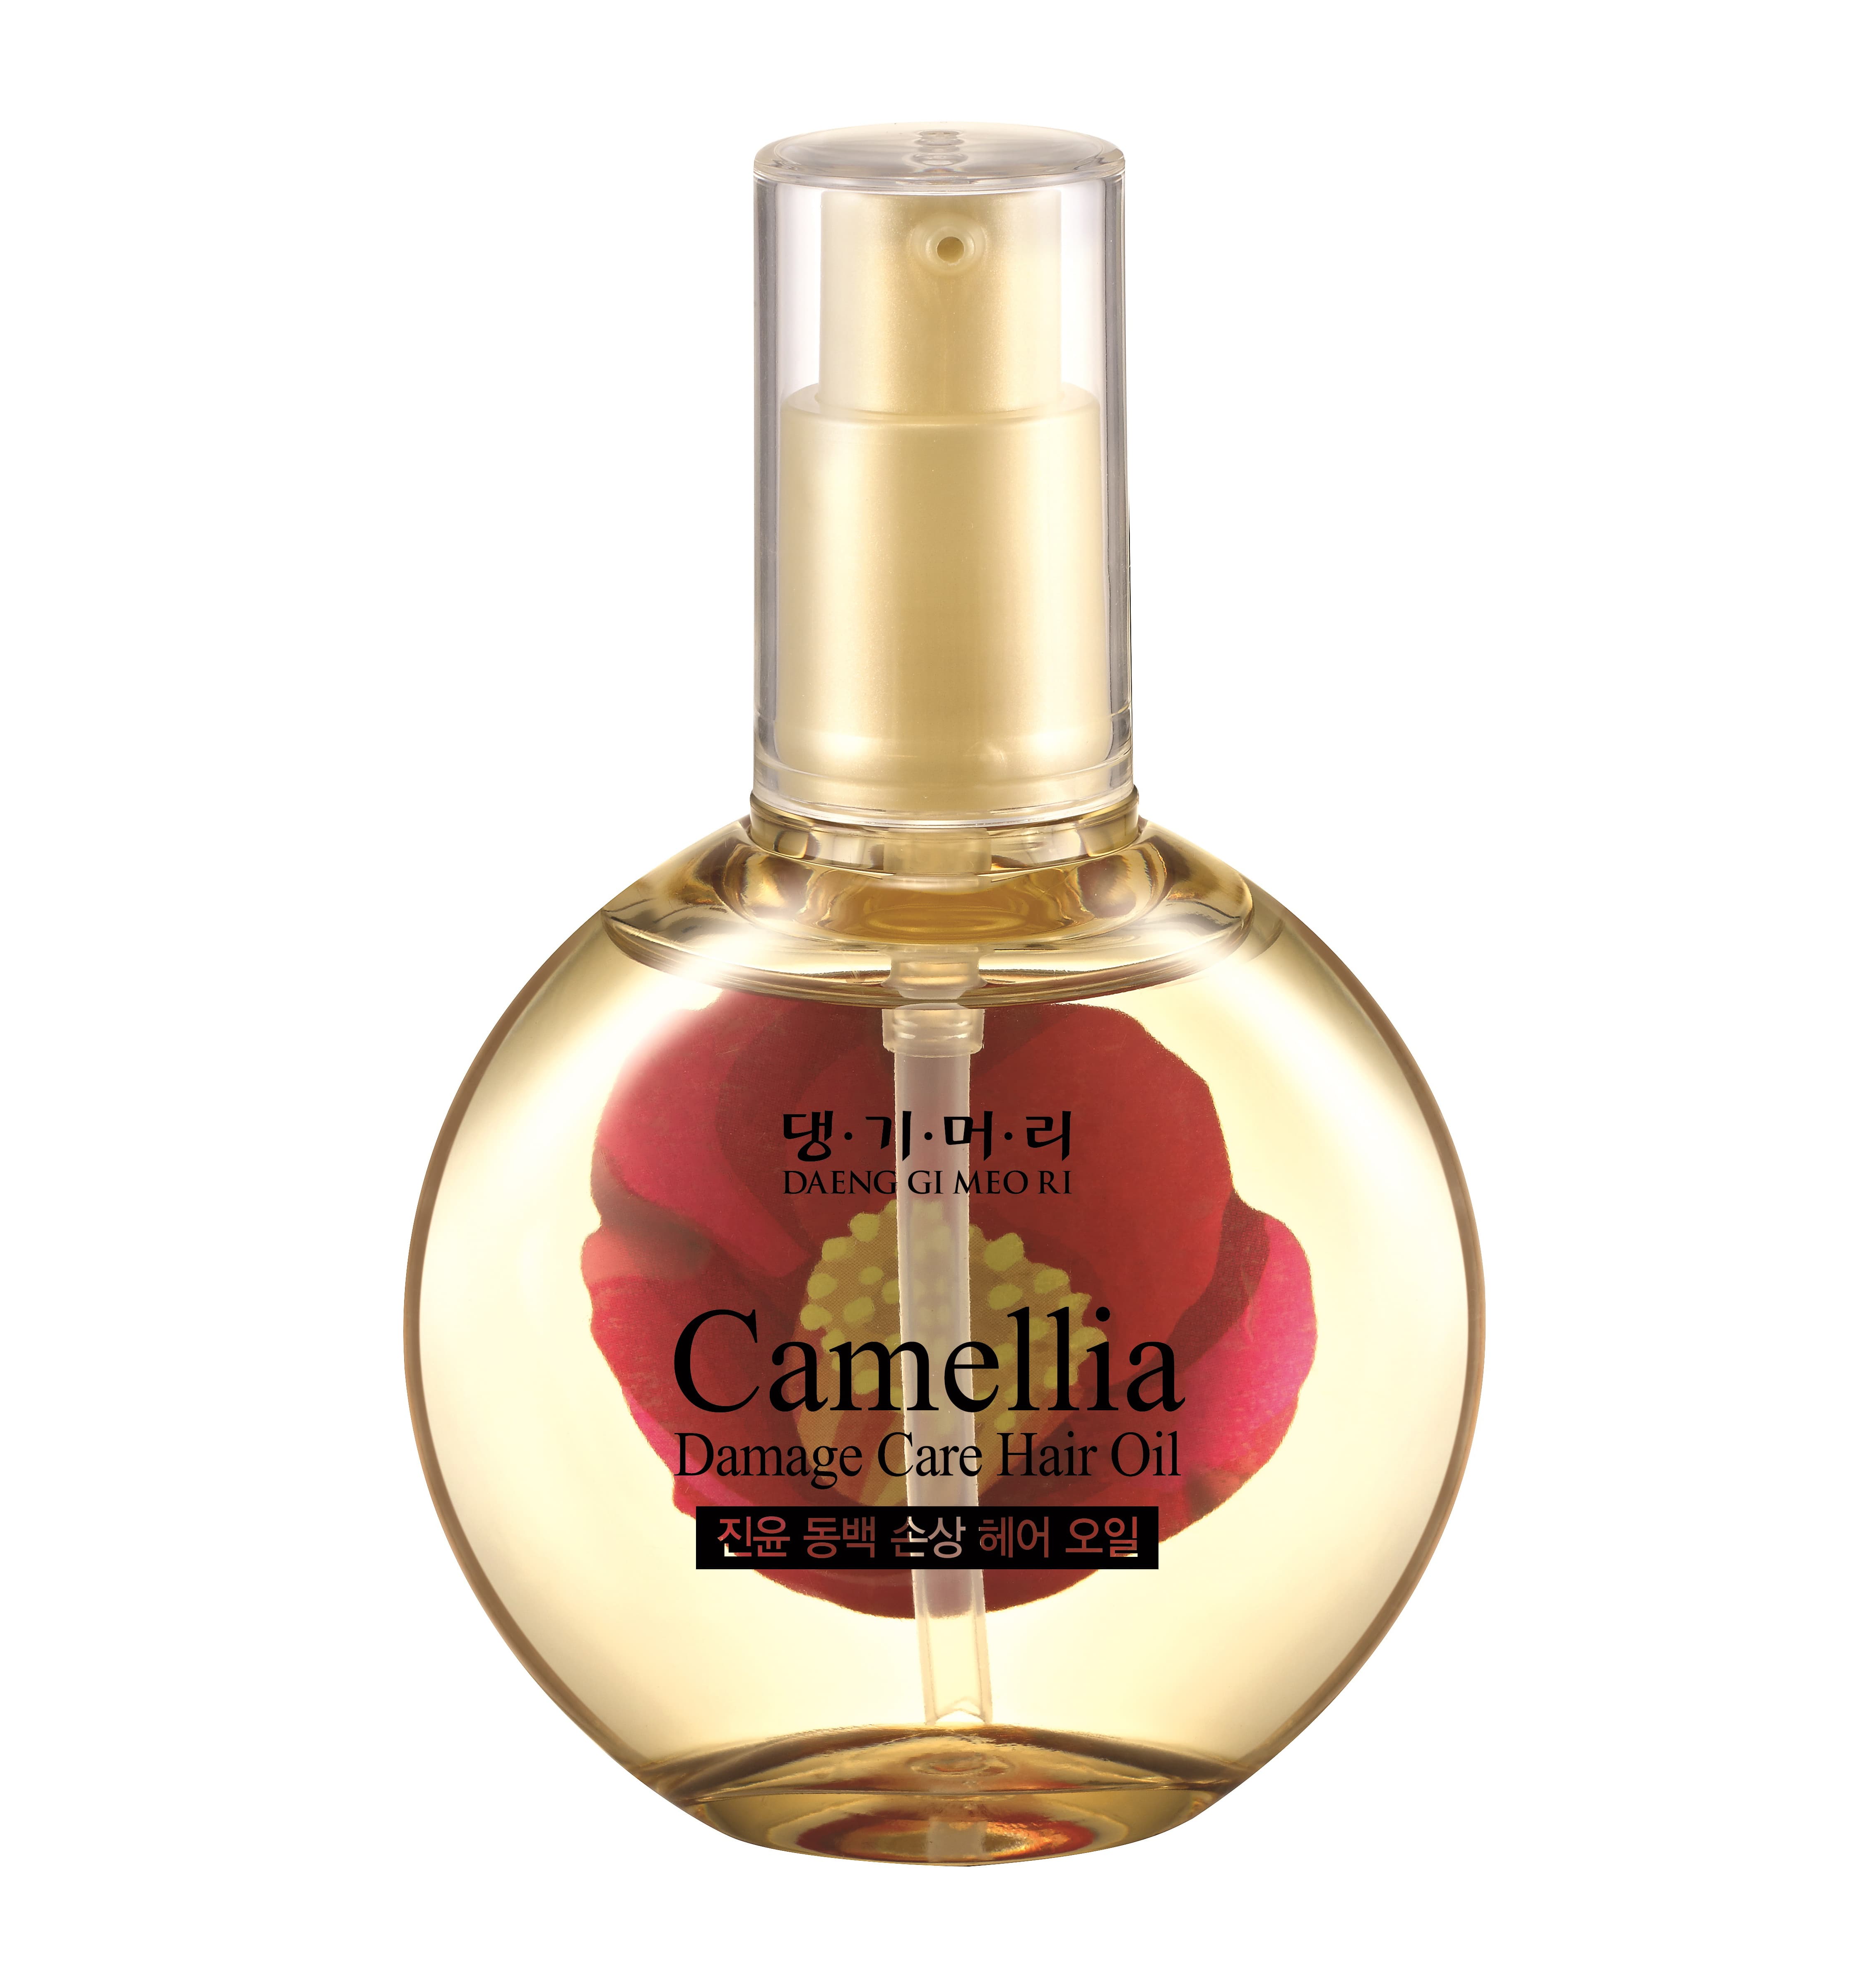 Camellia Damage Care Hair Oil Масло Для Поврежденных Волос